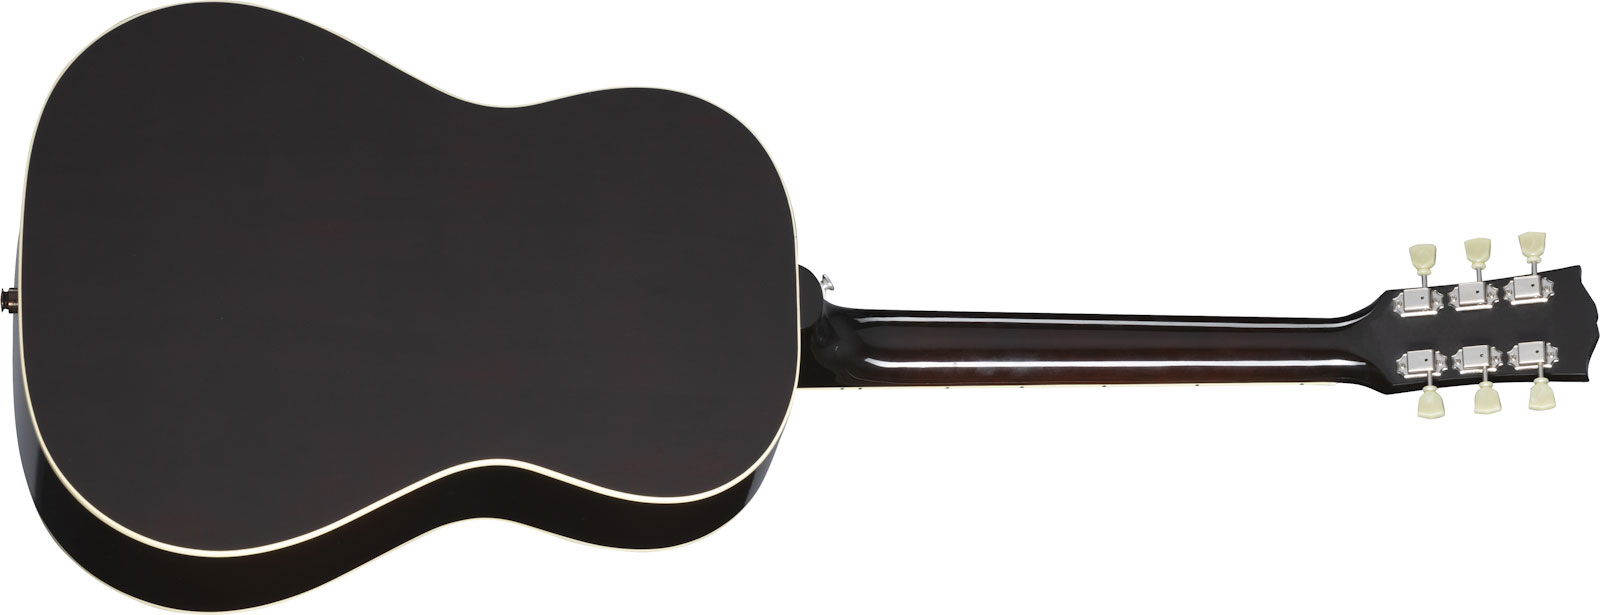 Gibson Nathaniel Rateliff Lg-2 Western Signature Epicea Acajou Rw - Vintage Sunburst - Elektro-akoestische gitaar - Variation 1